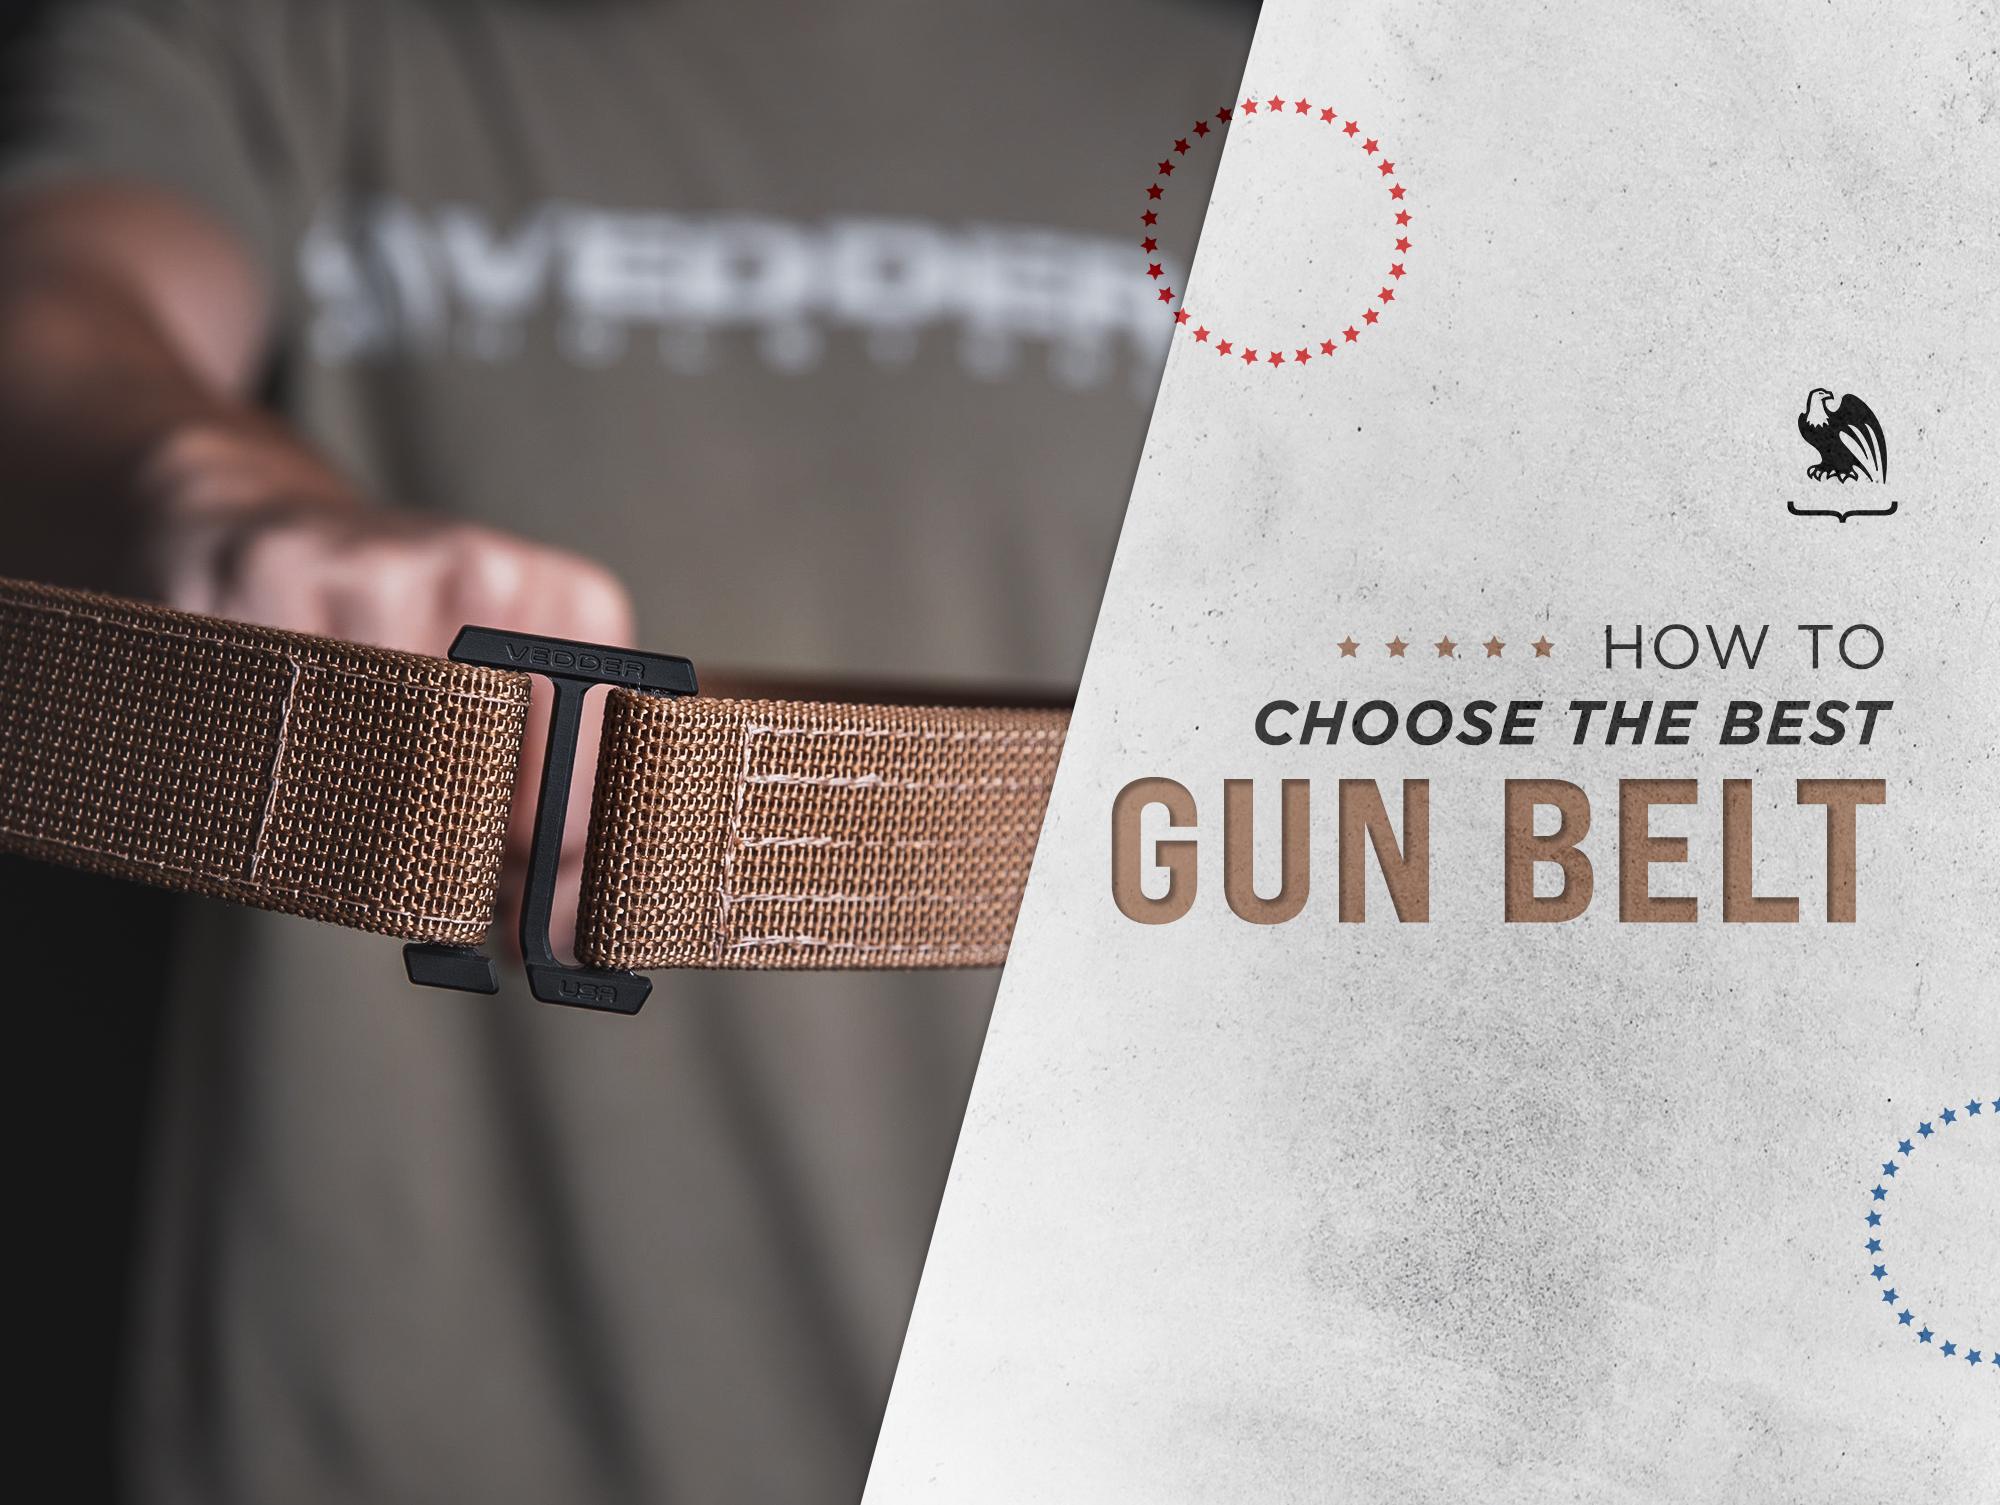 Steel Core Leather Gun Belts - USA Made